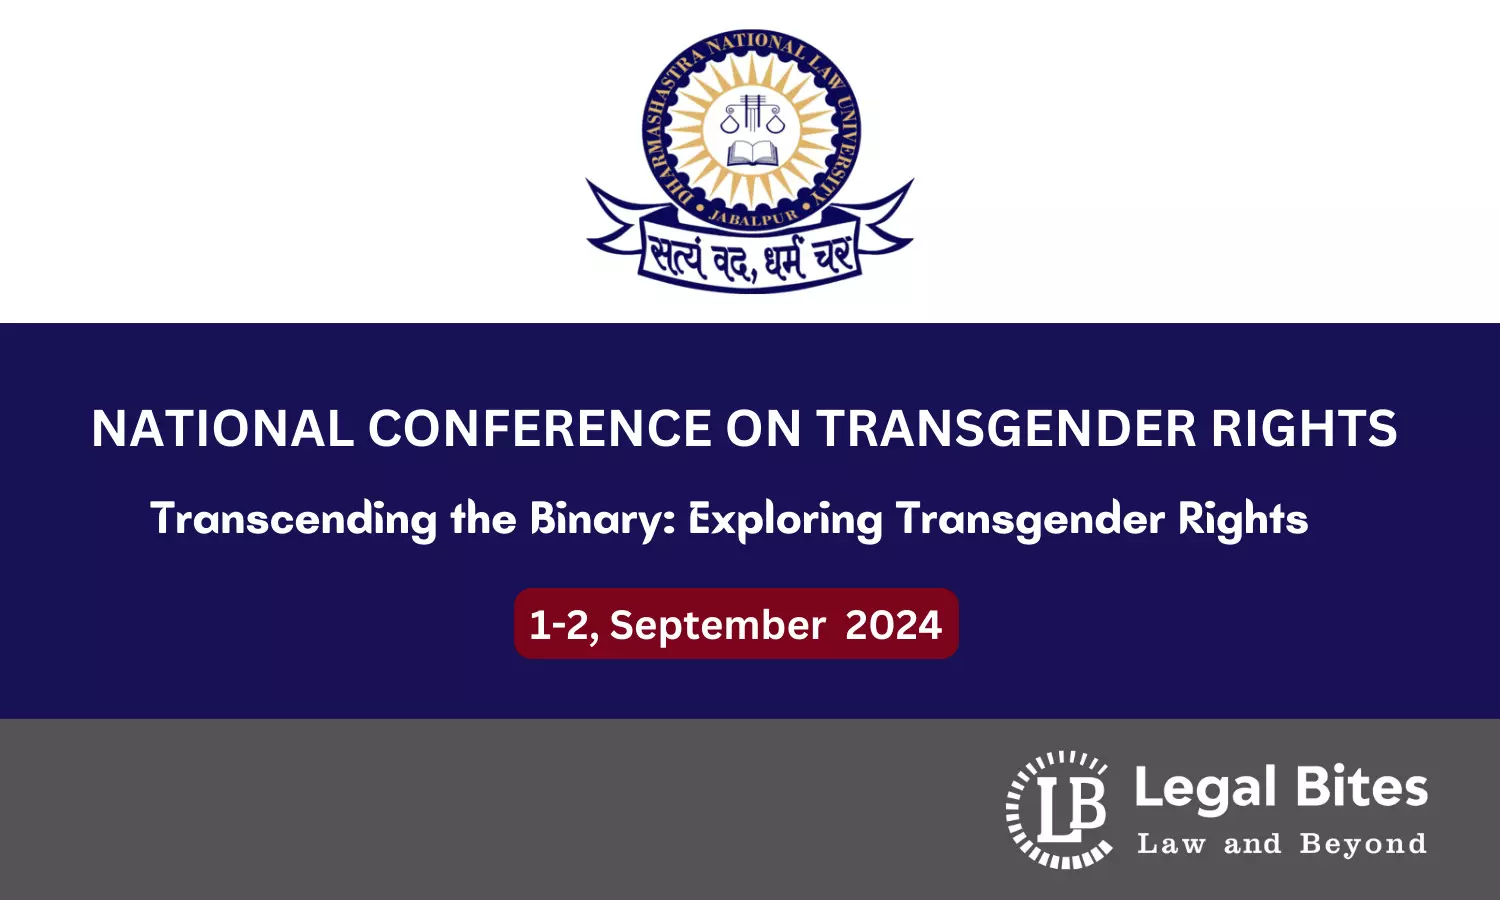 National Conference on Transgender Rights at Dharmashastra National Law University | September 1-2